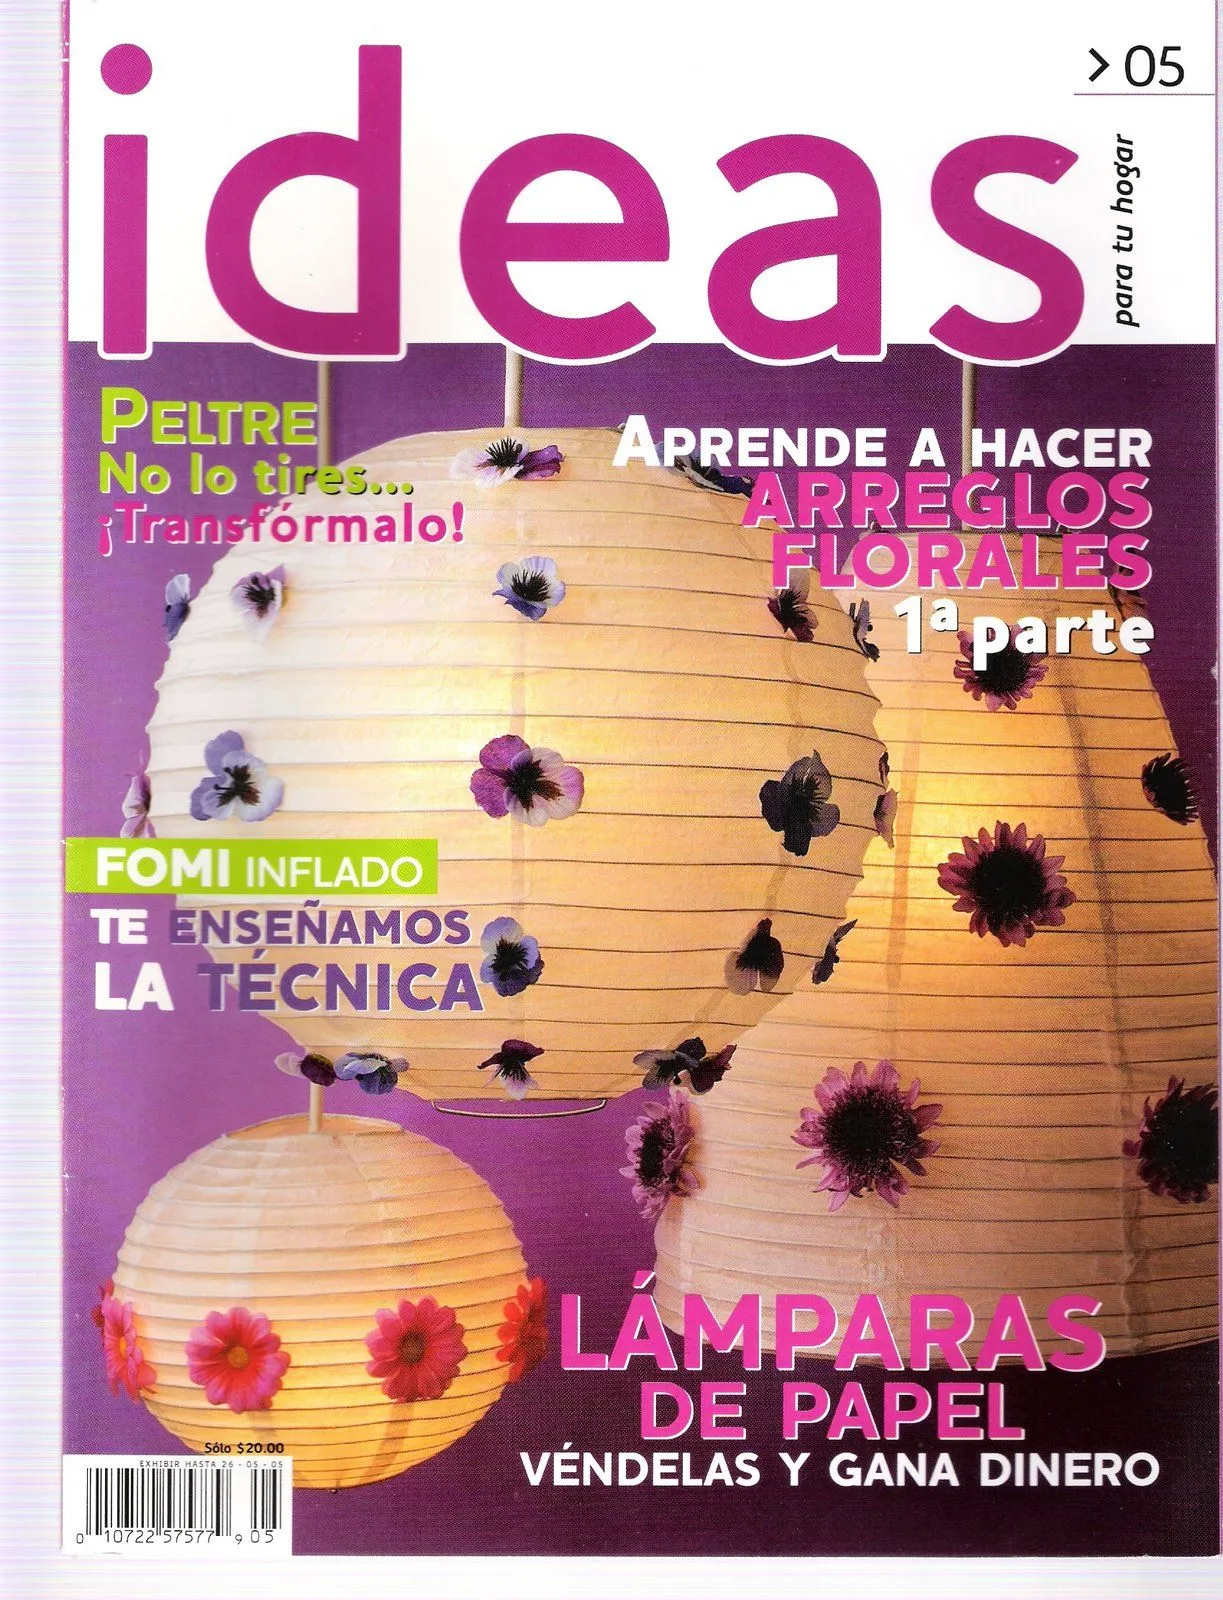 TODAS LAS REVISTAS DE MANUALIDADES GRATIS: Ideas nº 05 - revista ...